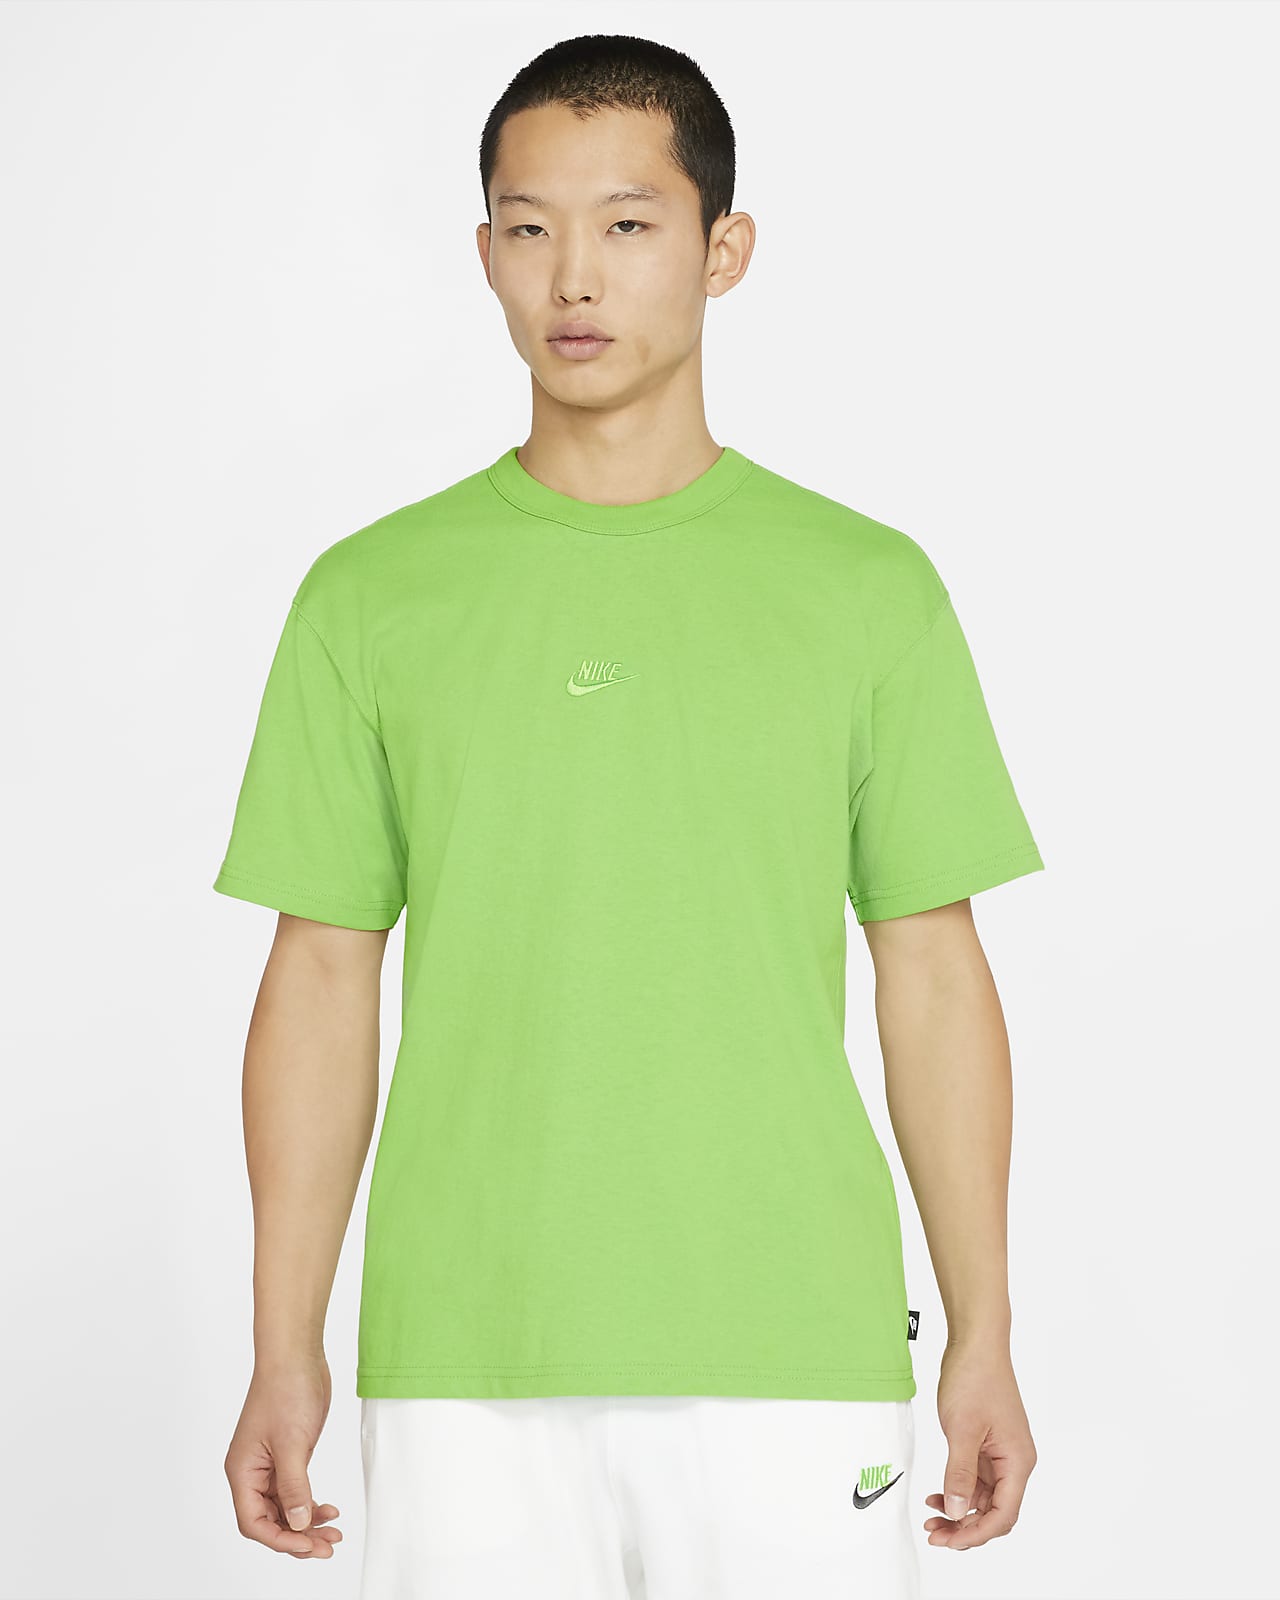 nike green shirt mens